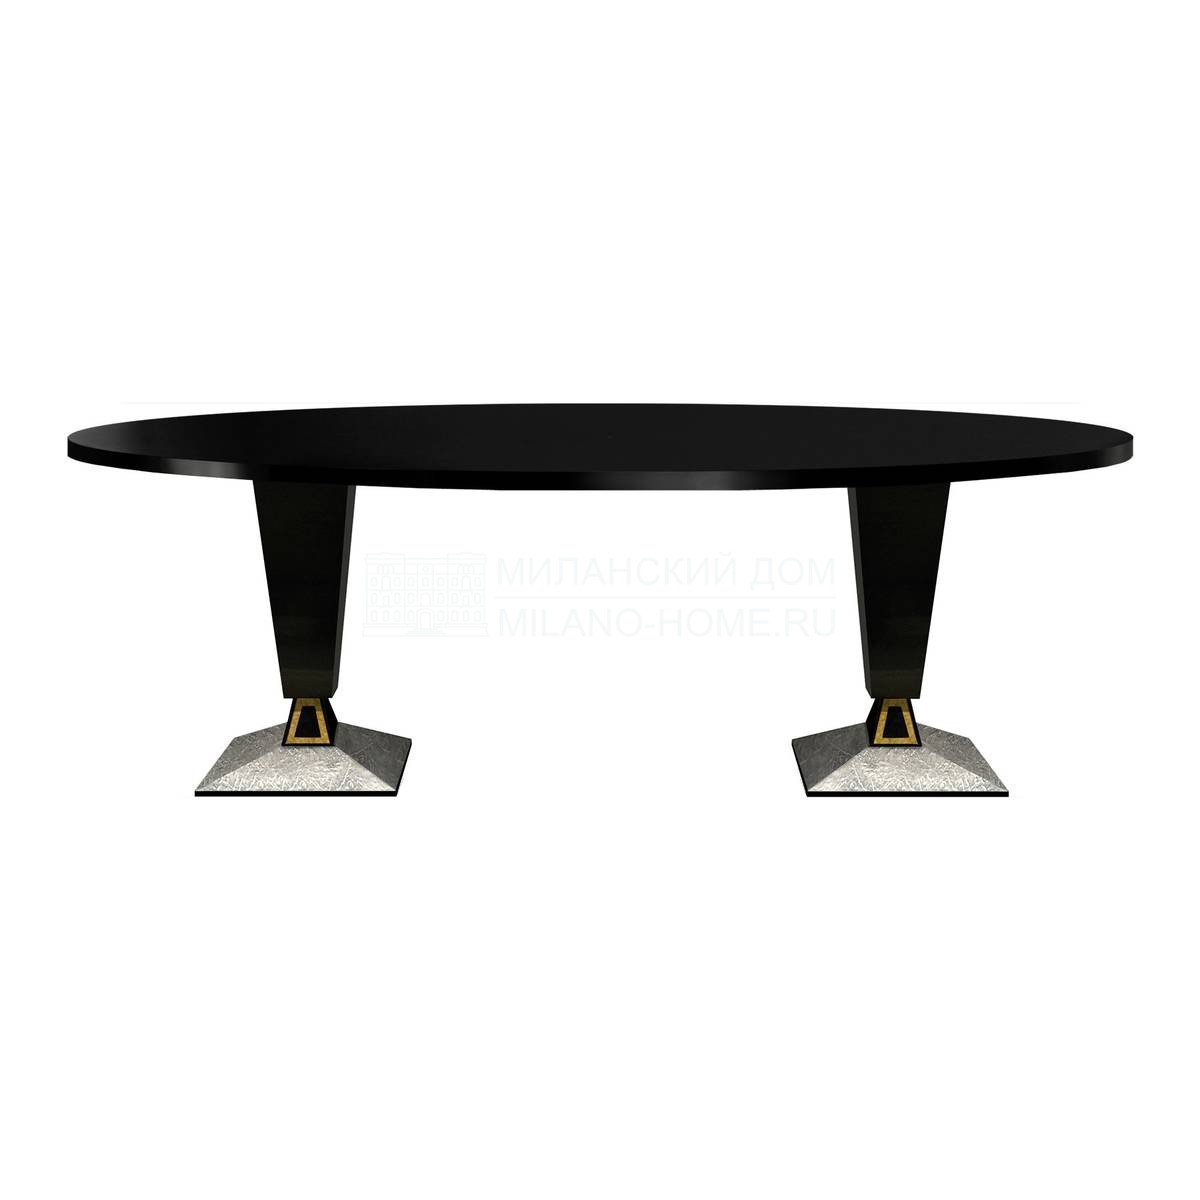 Обеденный стол Tullia table из Италии фабрики ISABELLA COSTANTINI